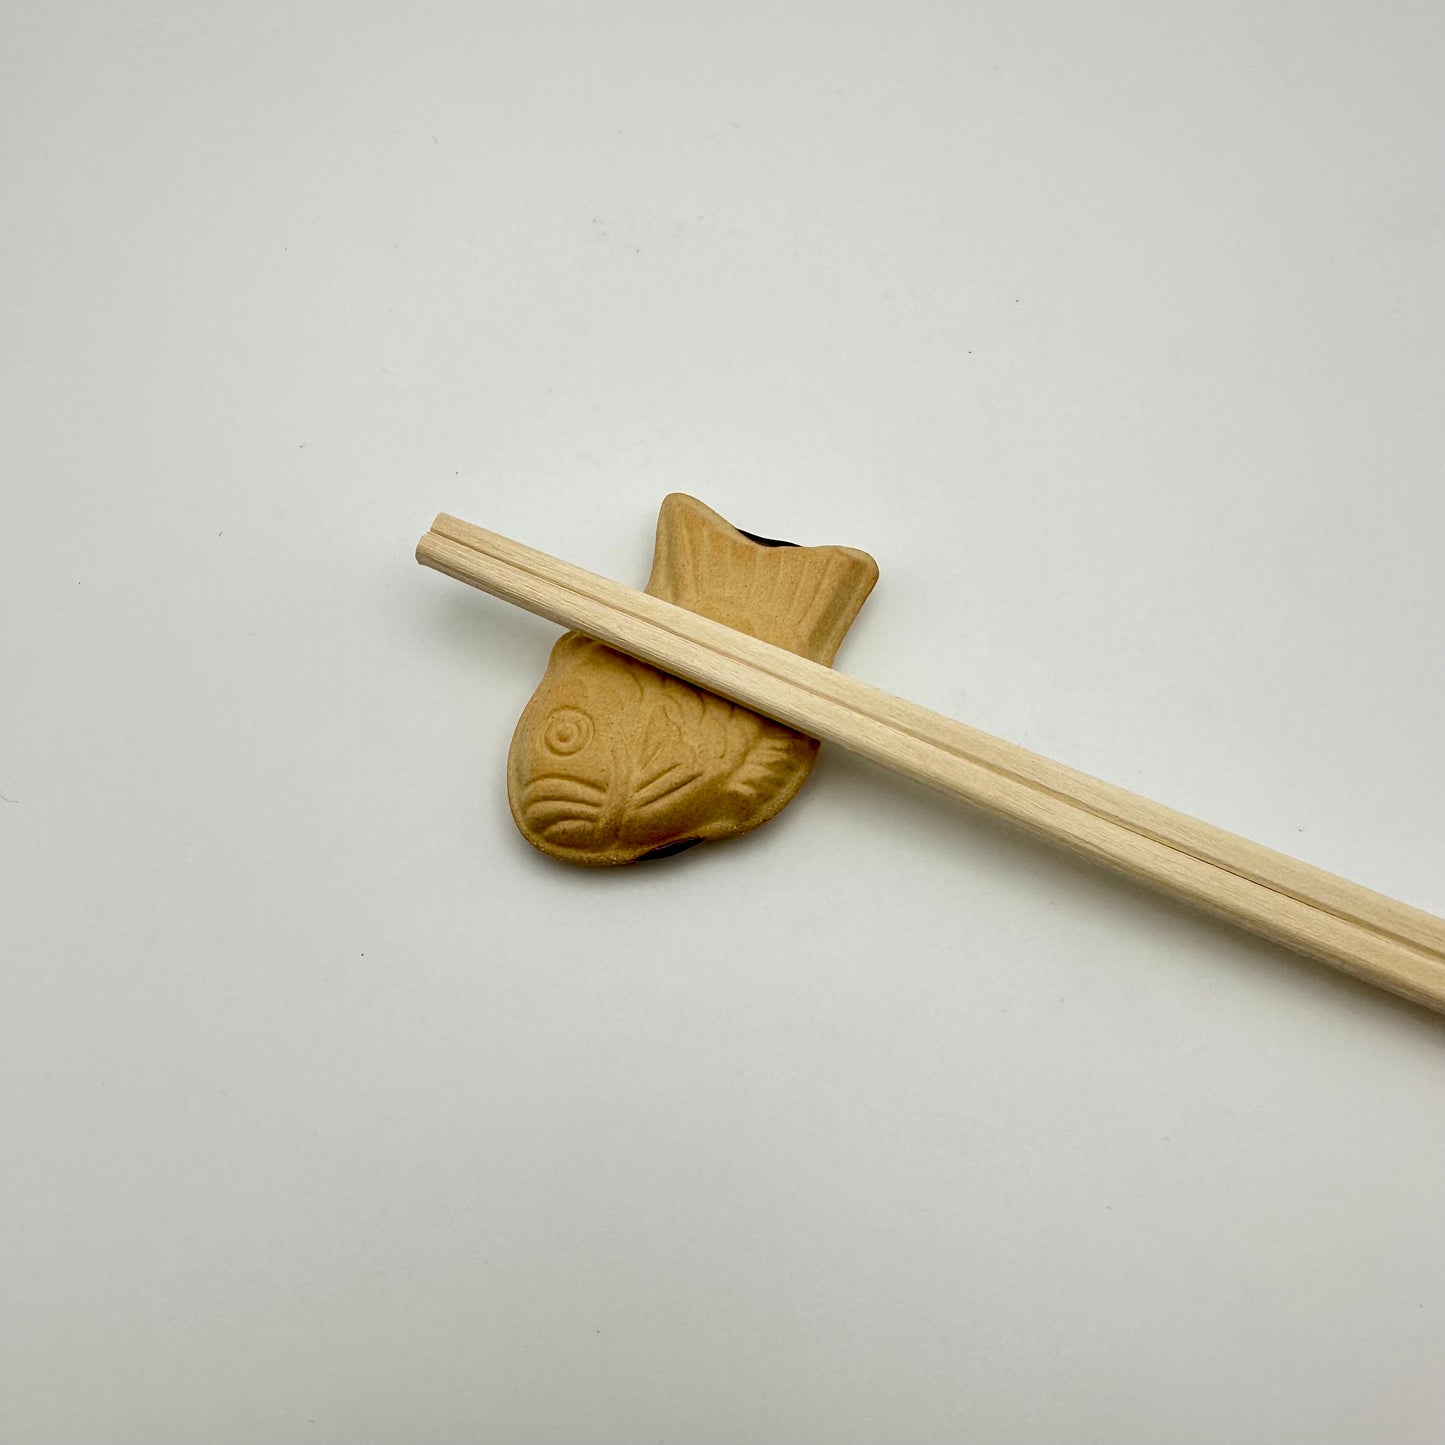 Taiyaki choptick holders with chopsticks.